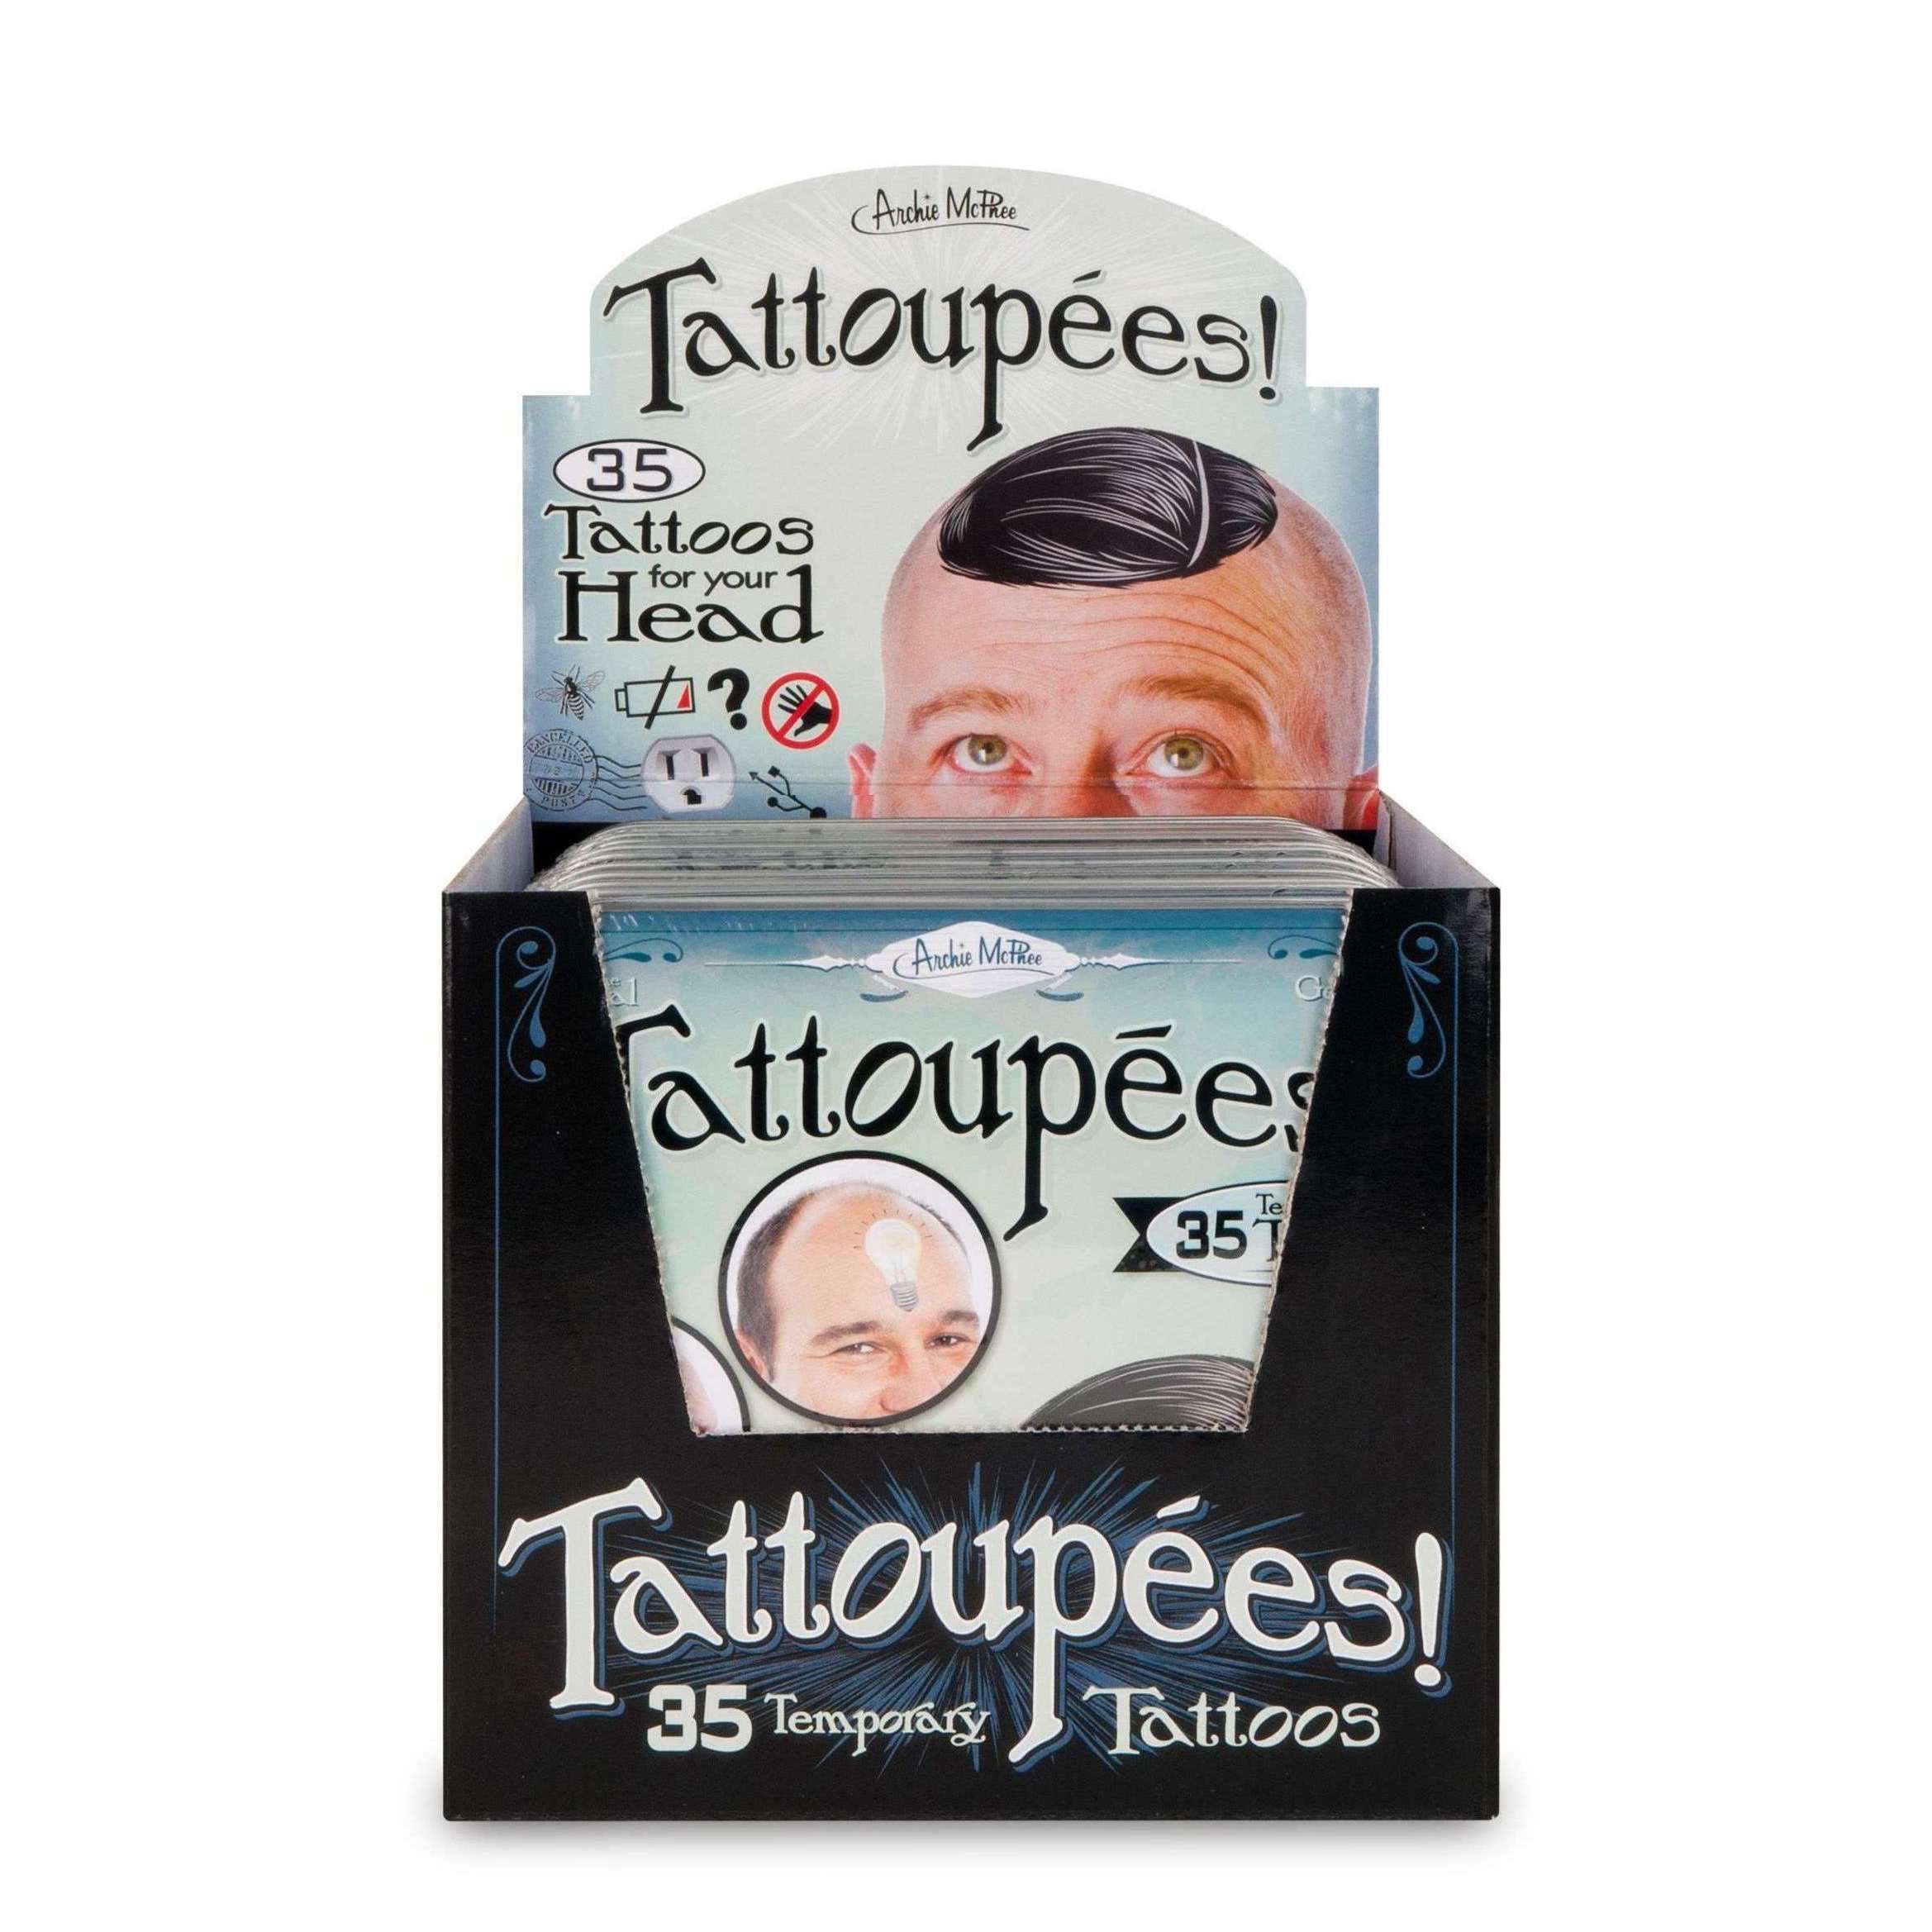 Tattoupees Bald Head Tattoos